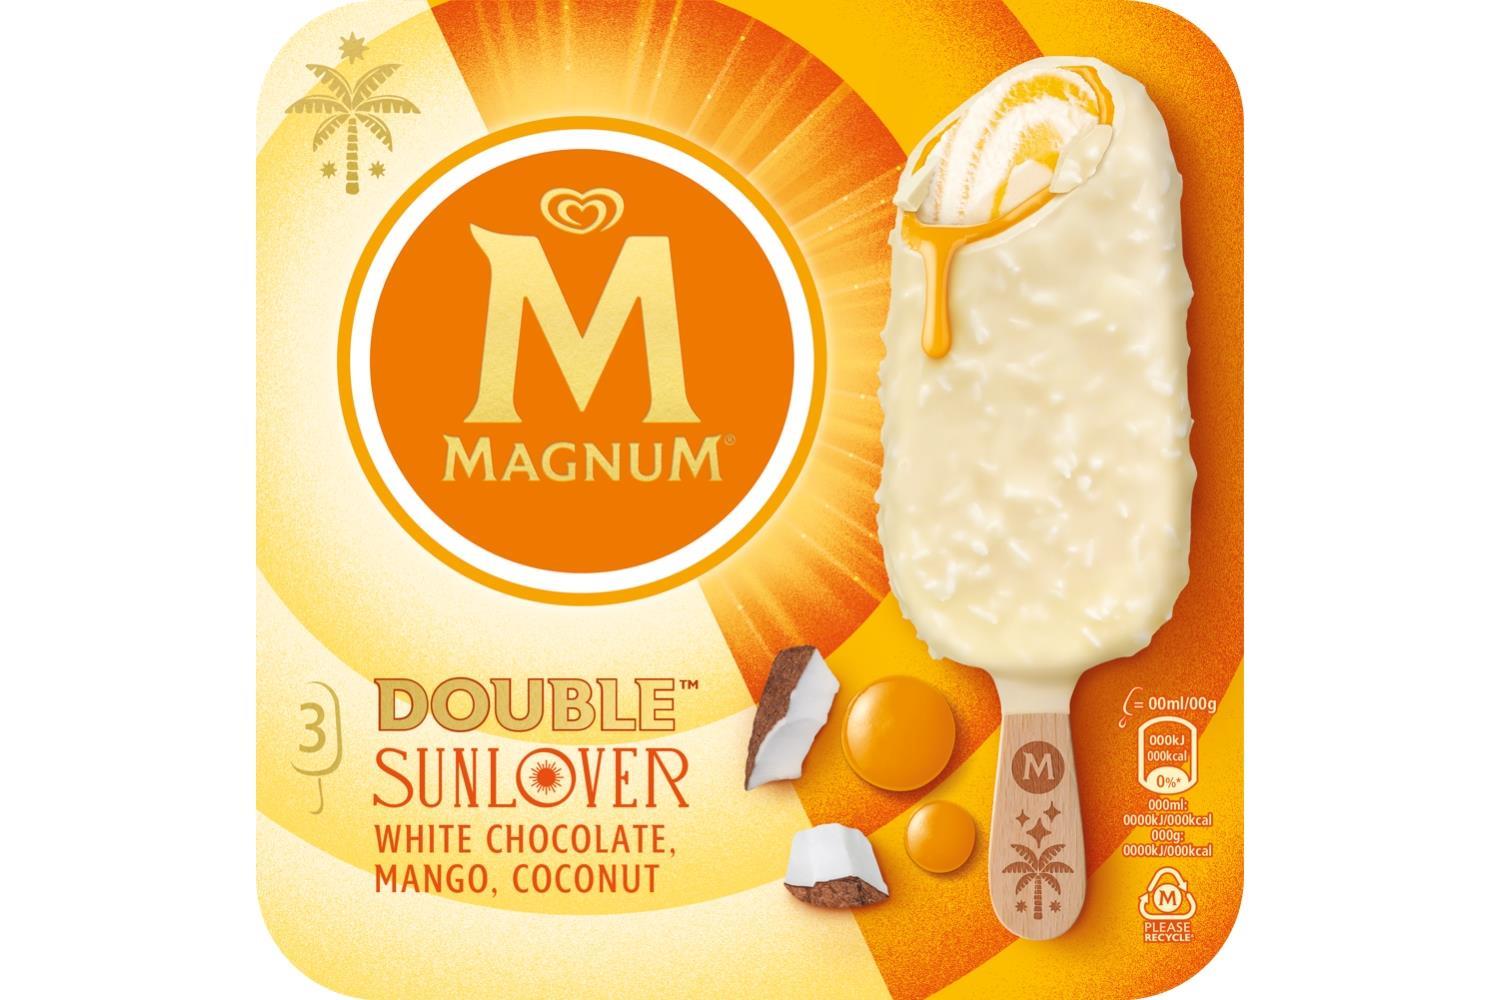 Verslinden naam Split Magnum adds new flavours and vegan lines for 2023 | News | The Grocer